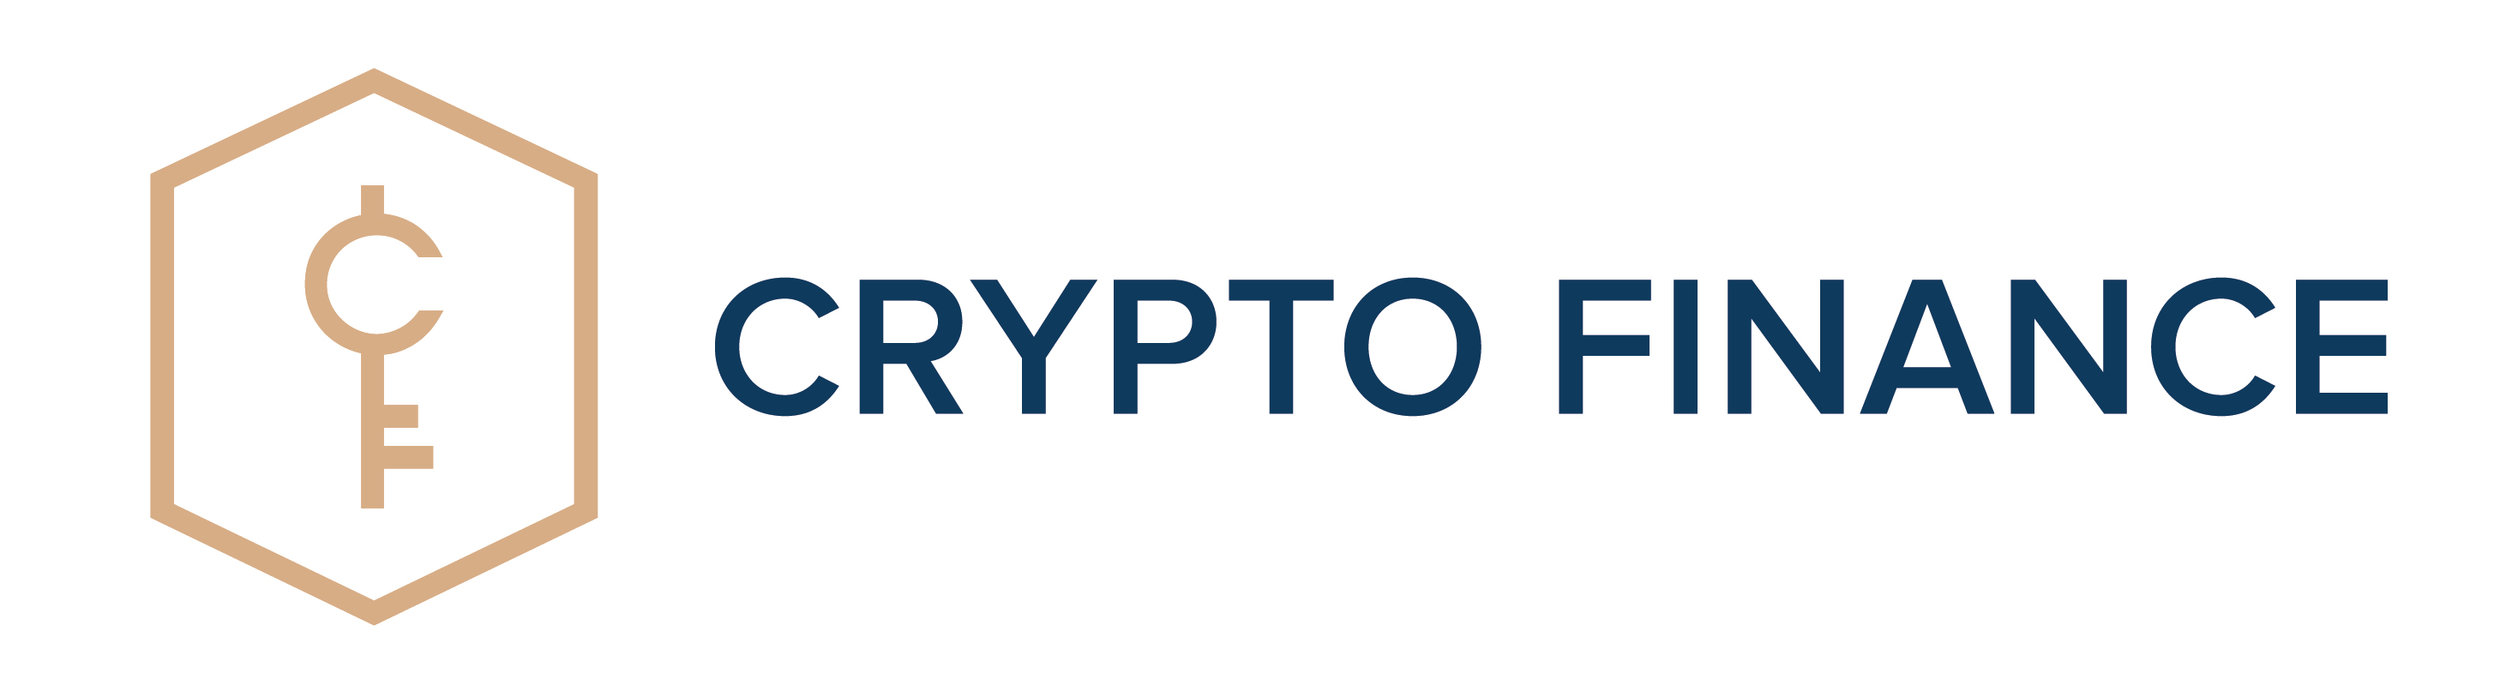 Crypto-Finance-logo.jpg